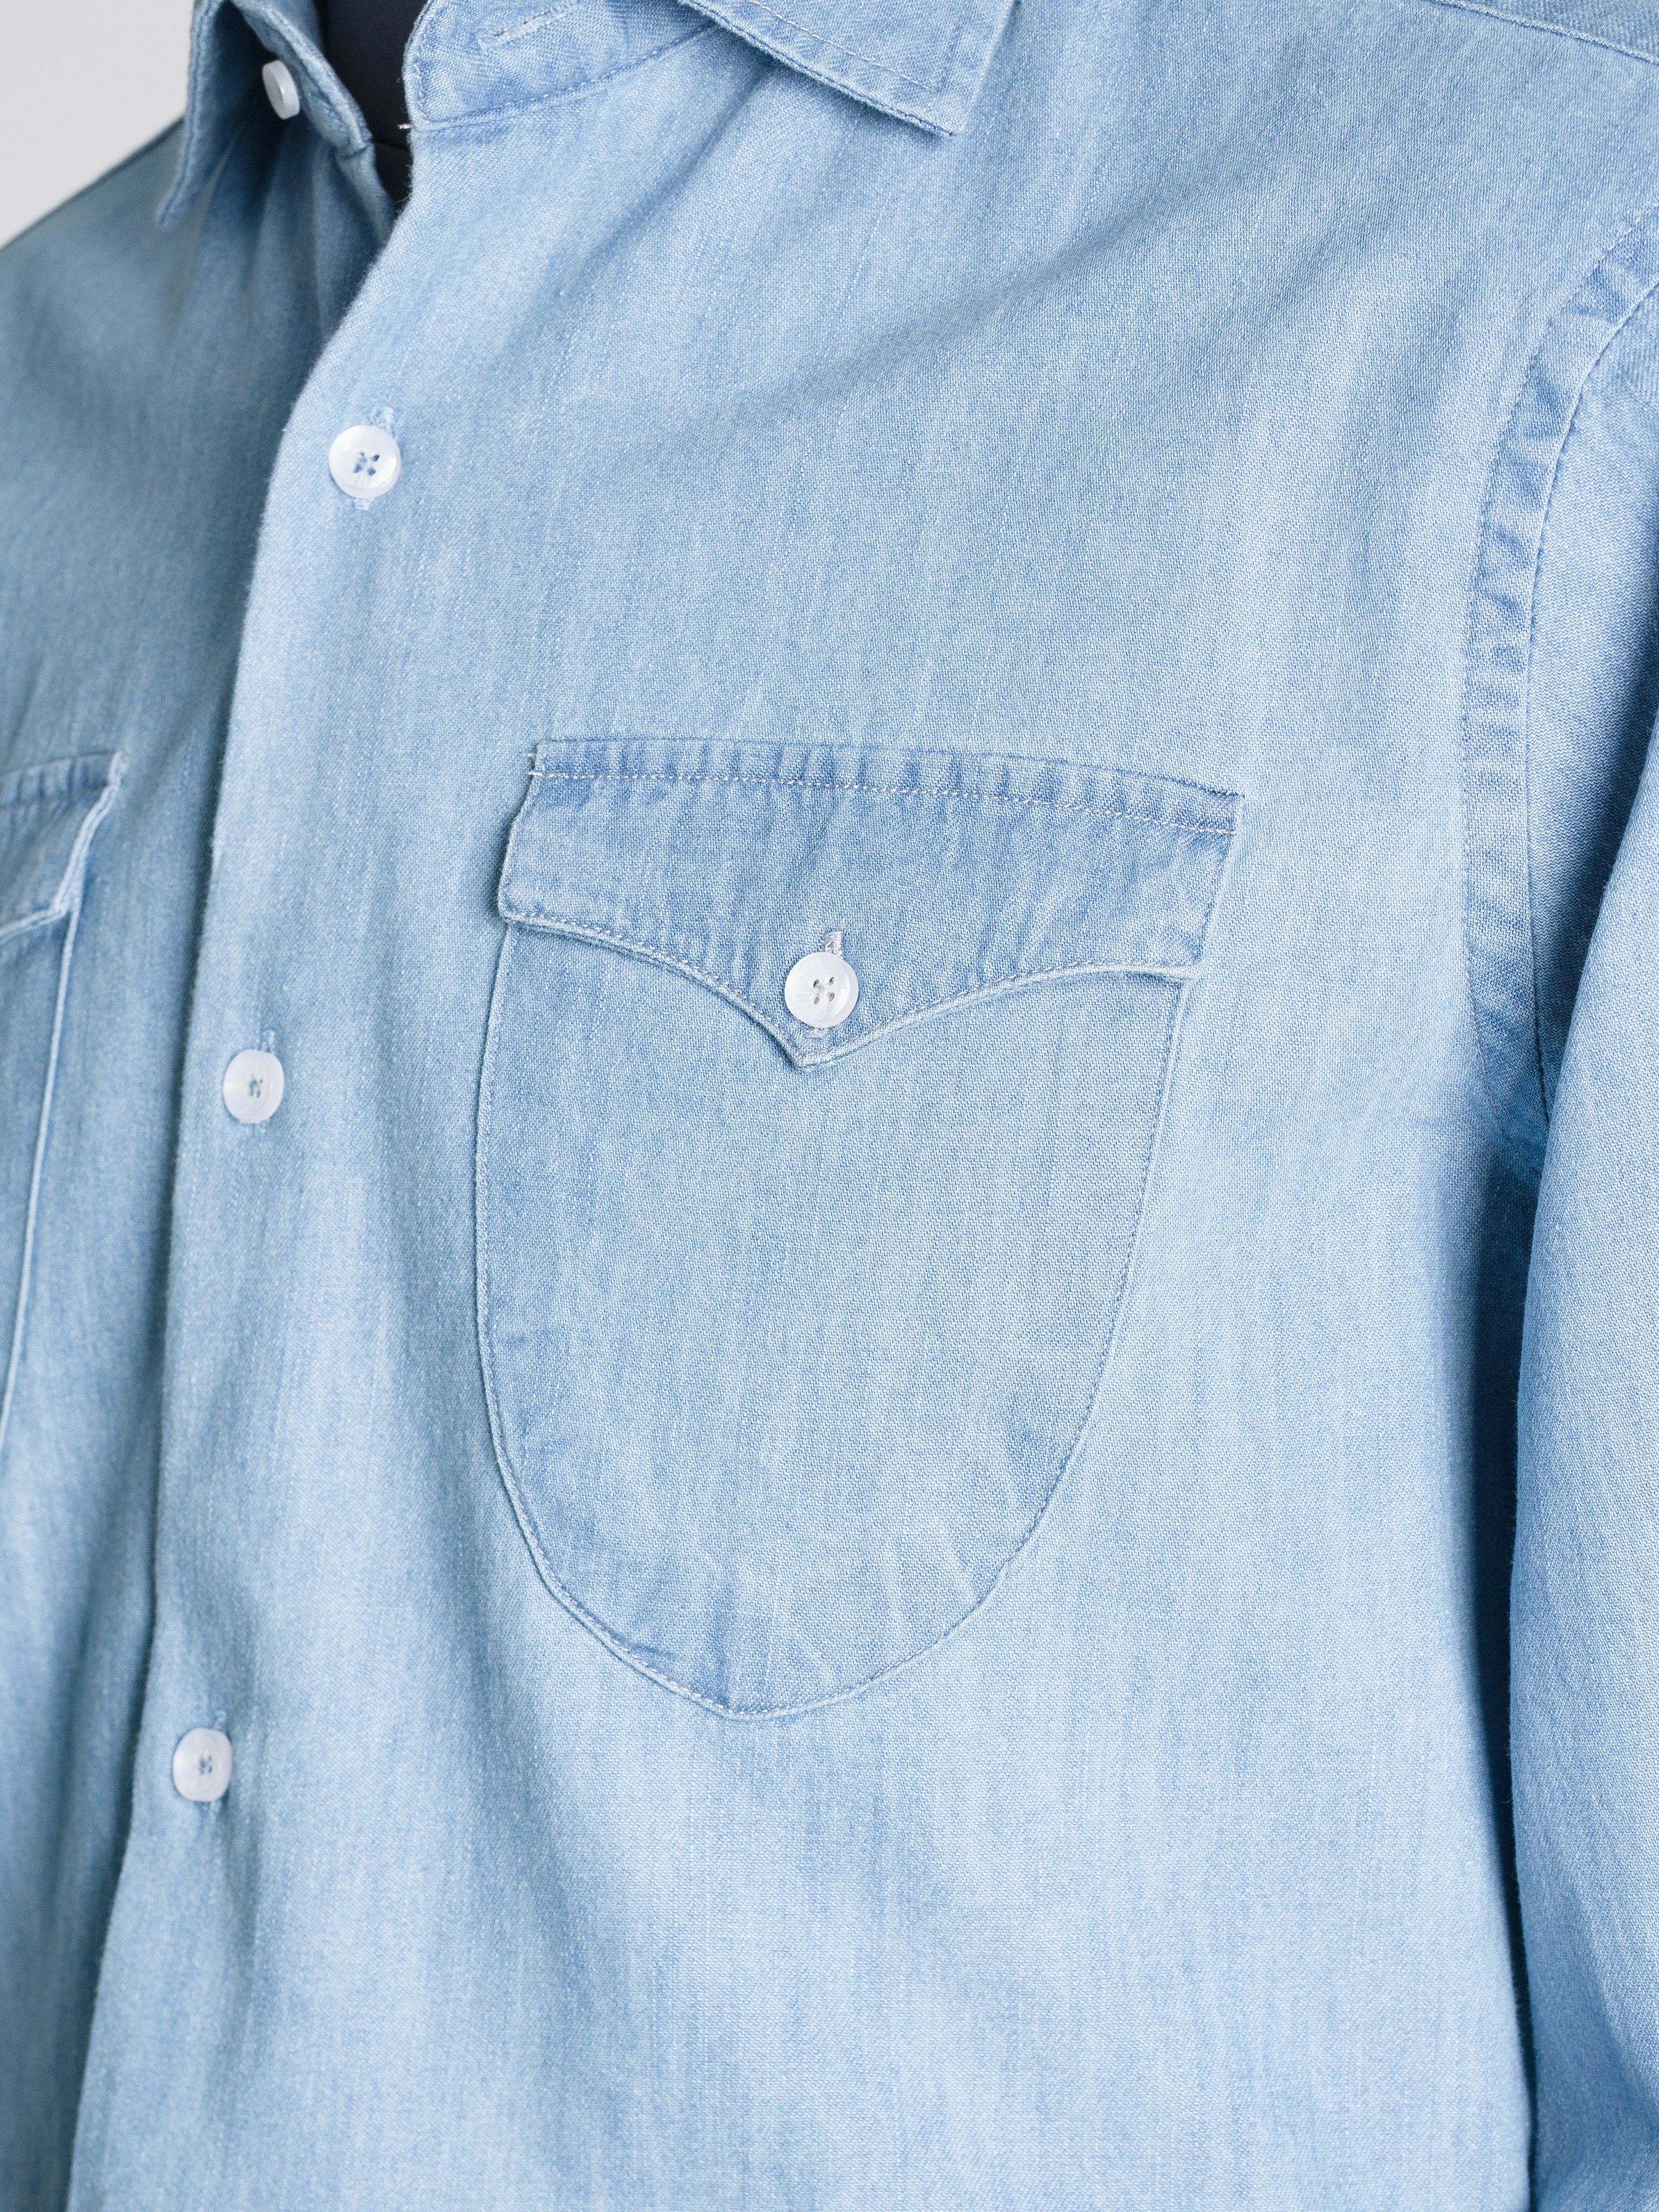 Mateo Denim Shirt - Light Blue Windsor Collar